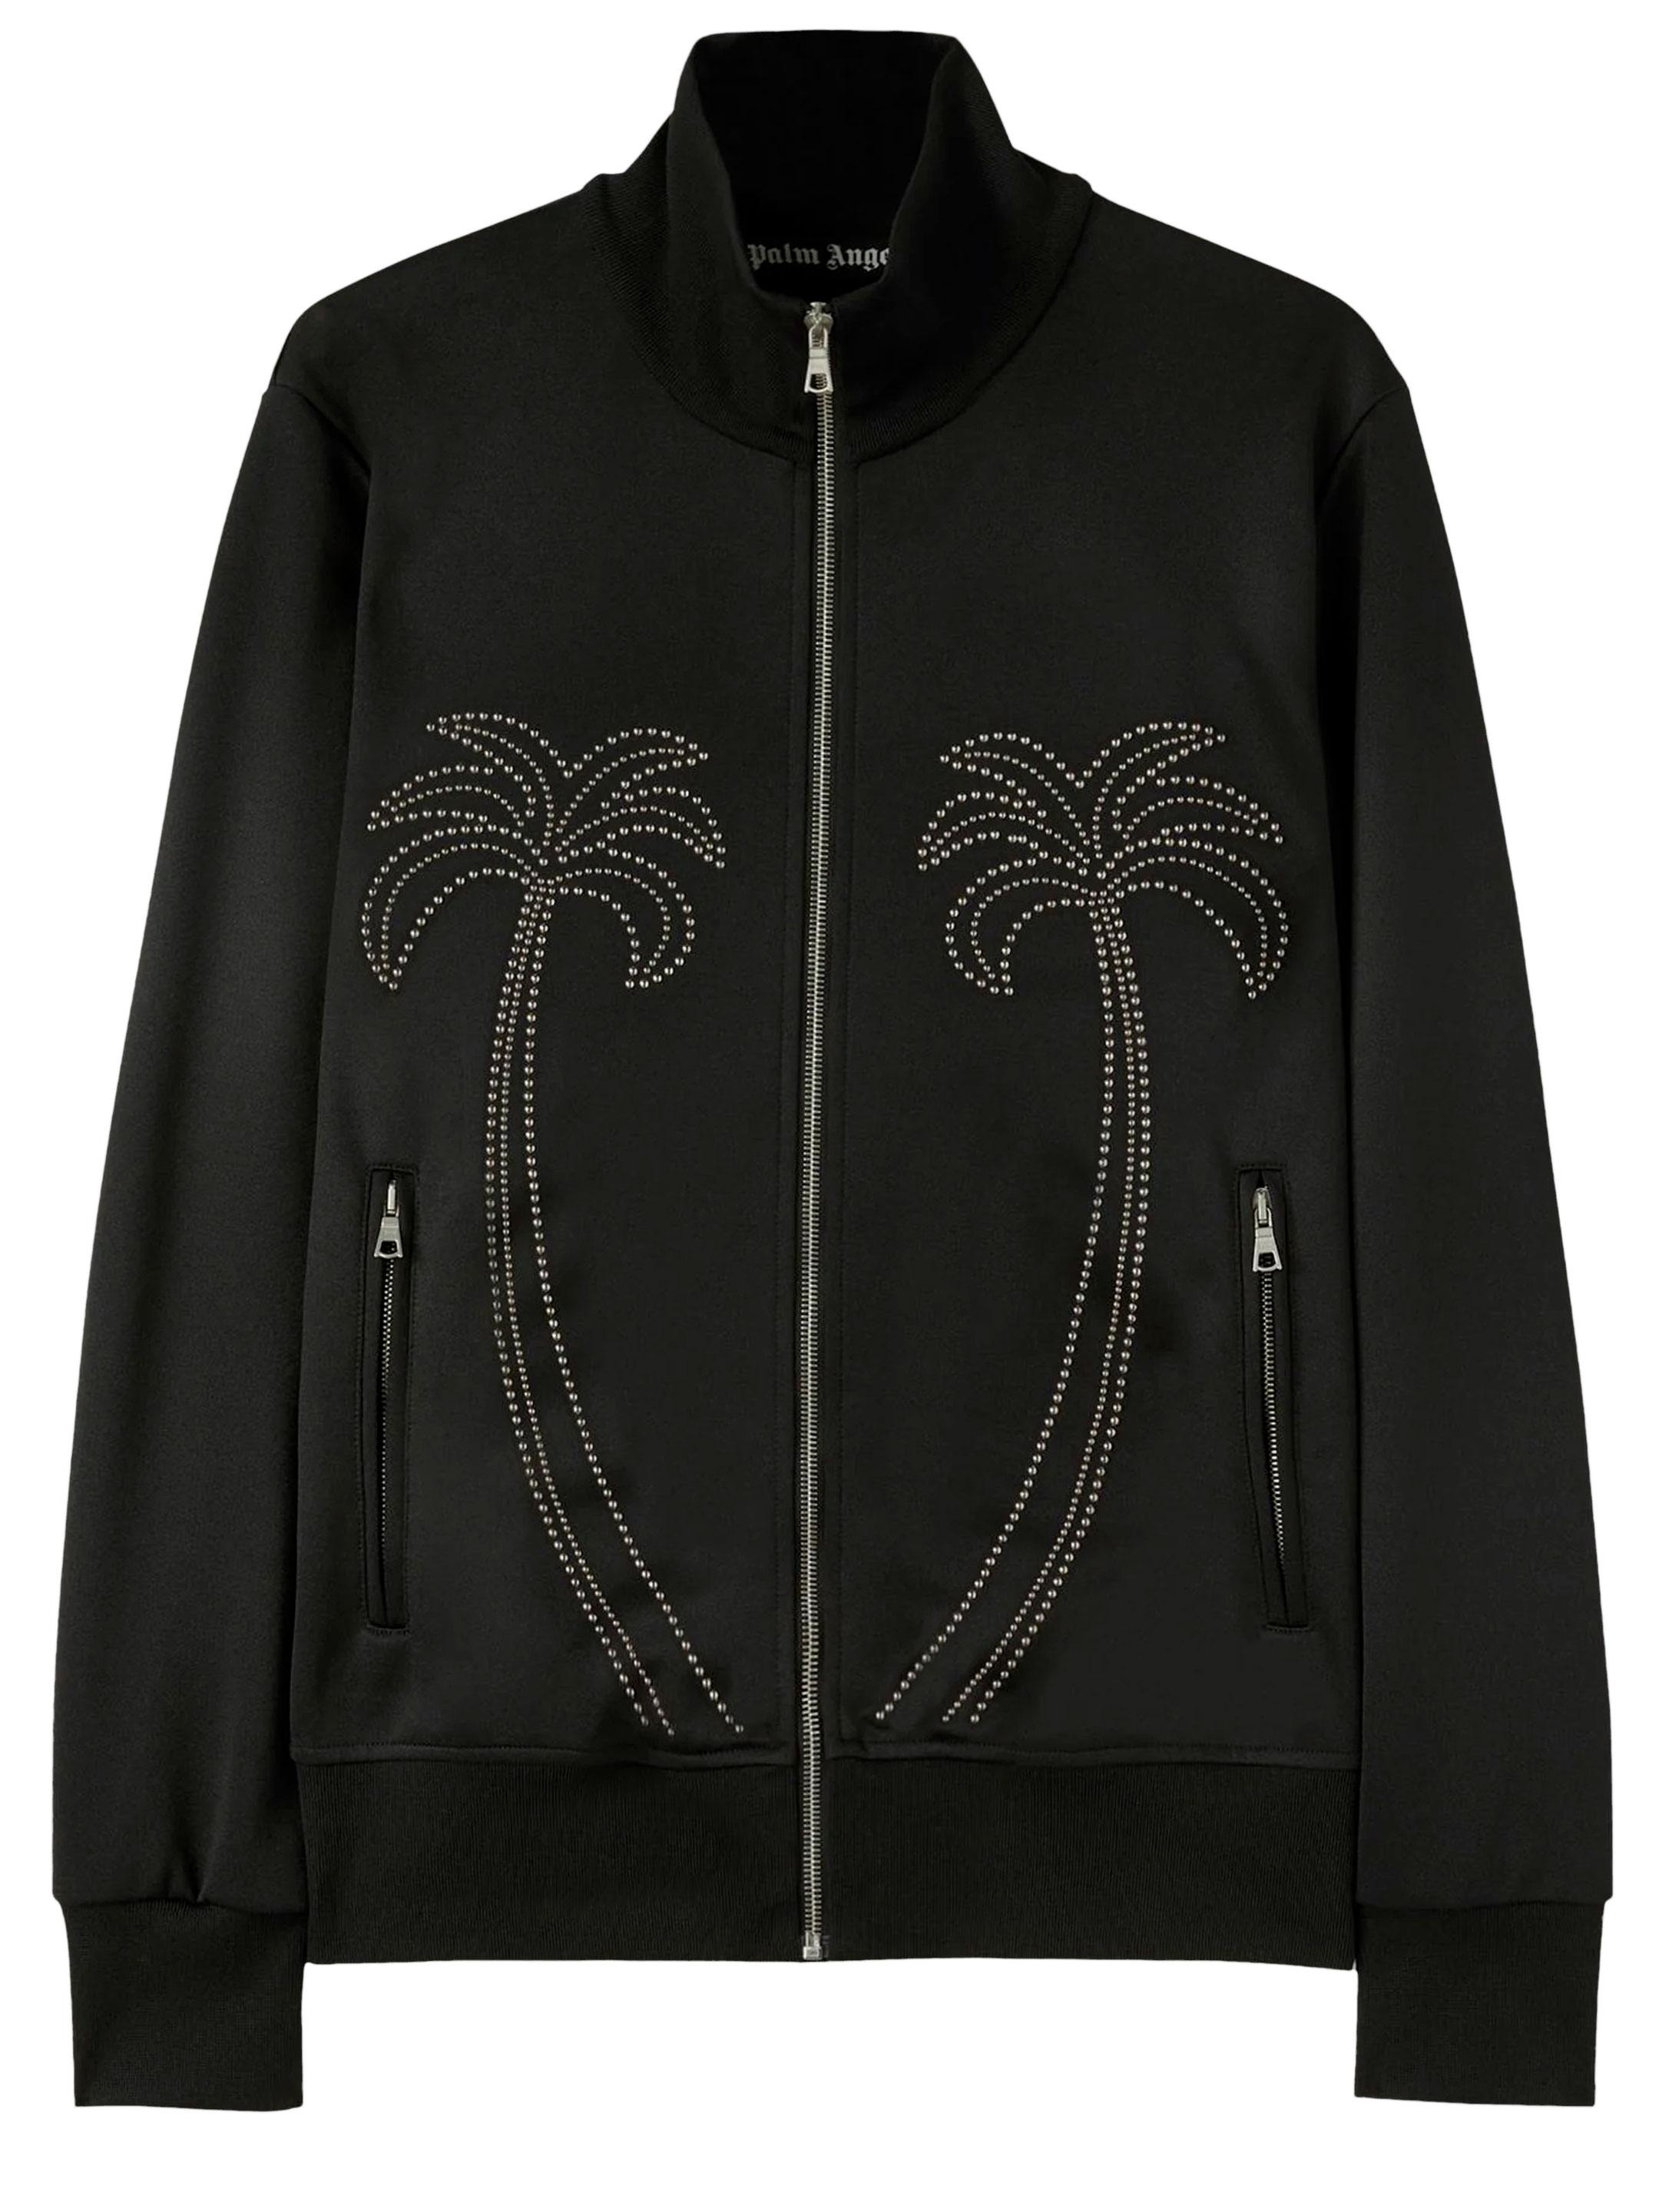 Куртка Palm Angels Milano track, черный спортивная куртка с вышивкой пайетками palm angels цвет grey off white